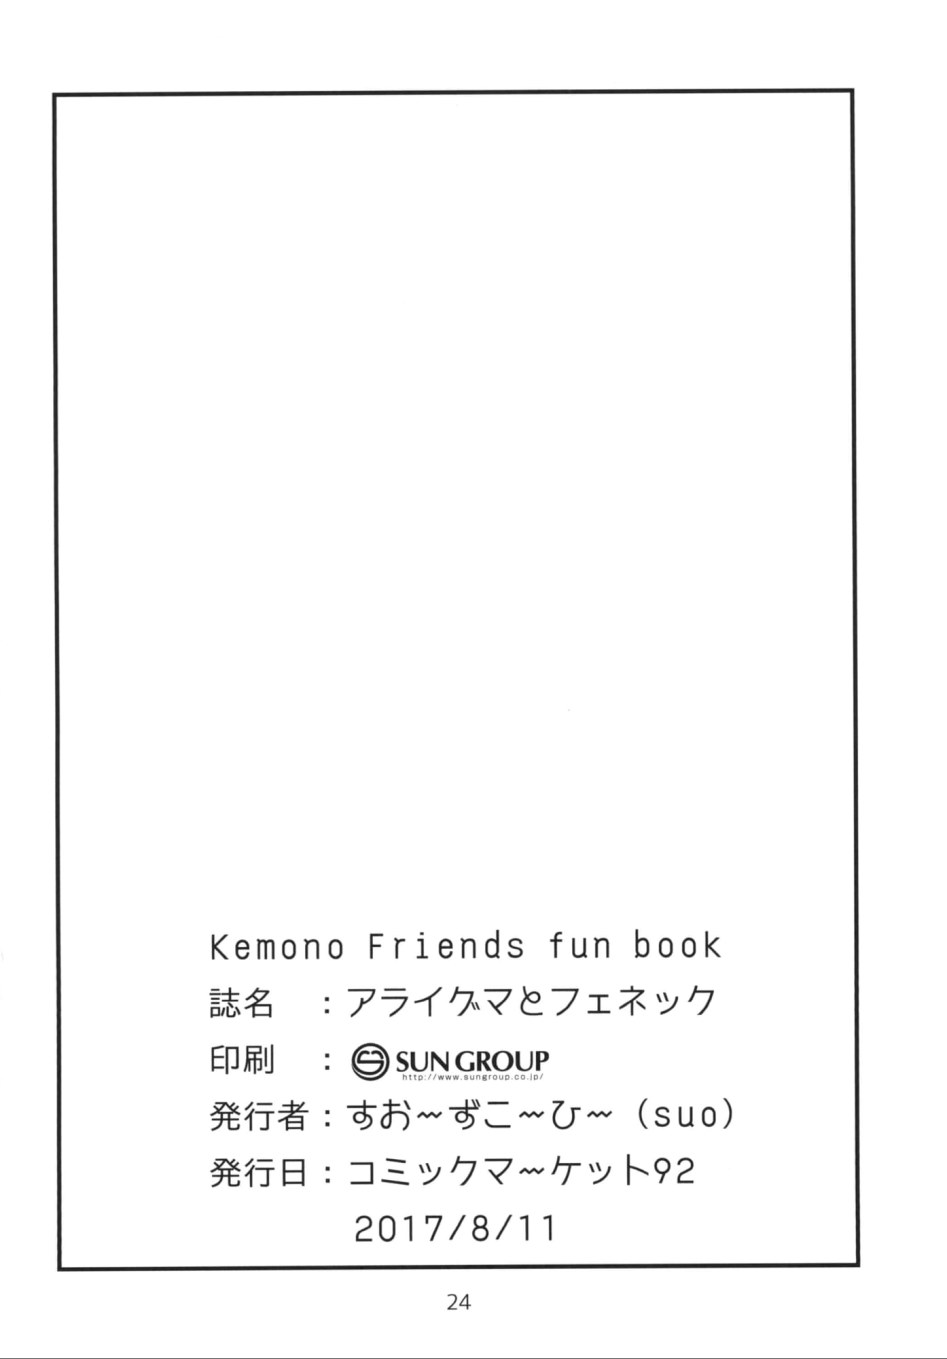 kemono-20180527-095100-008.jpg